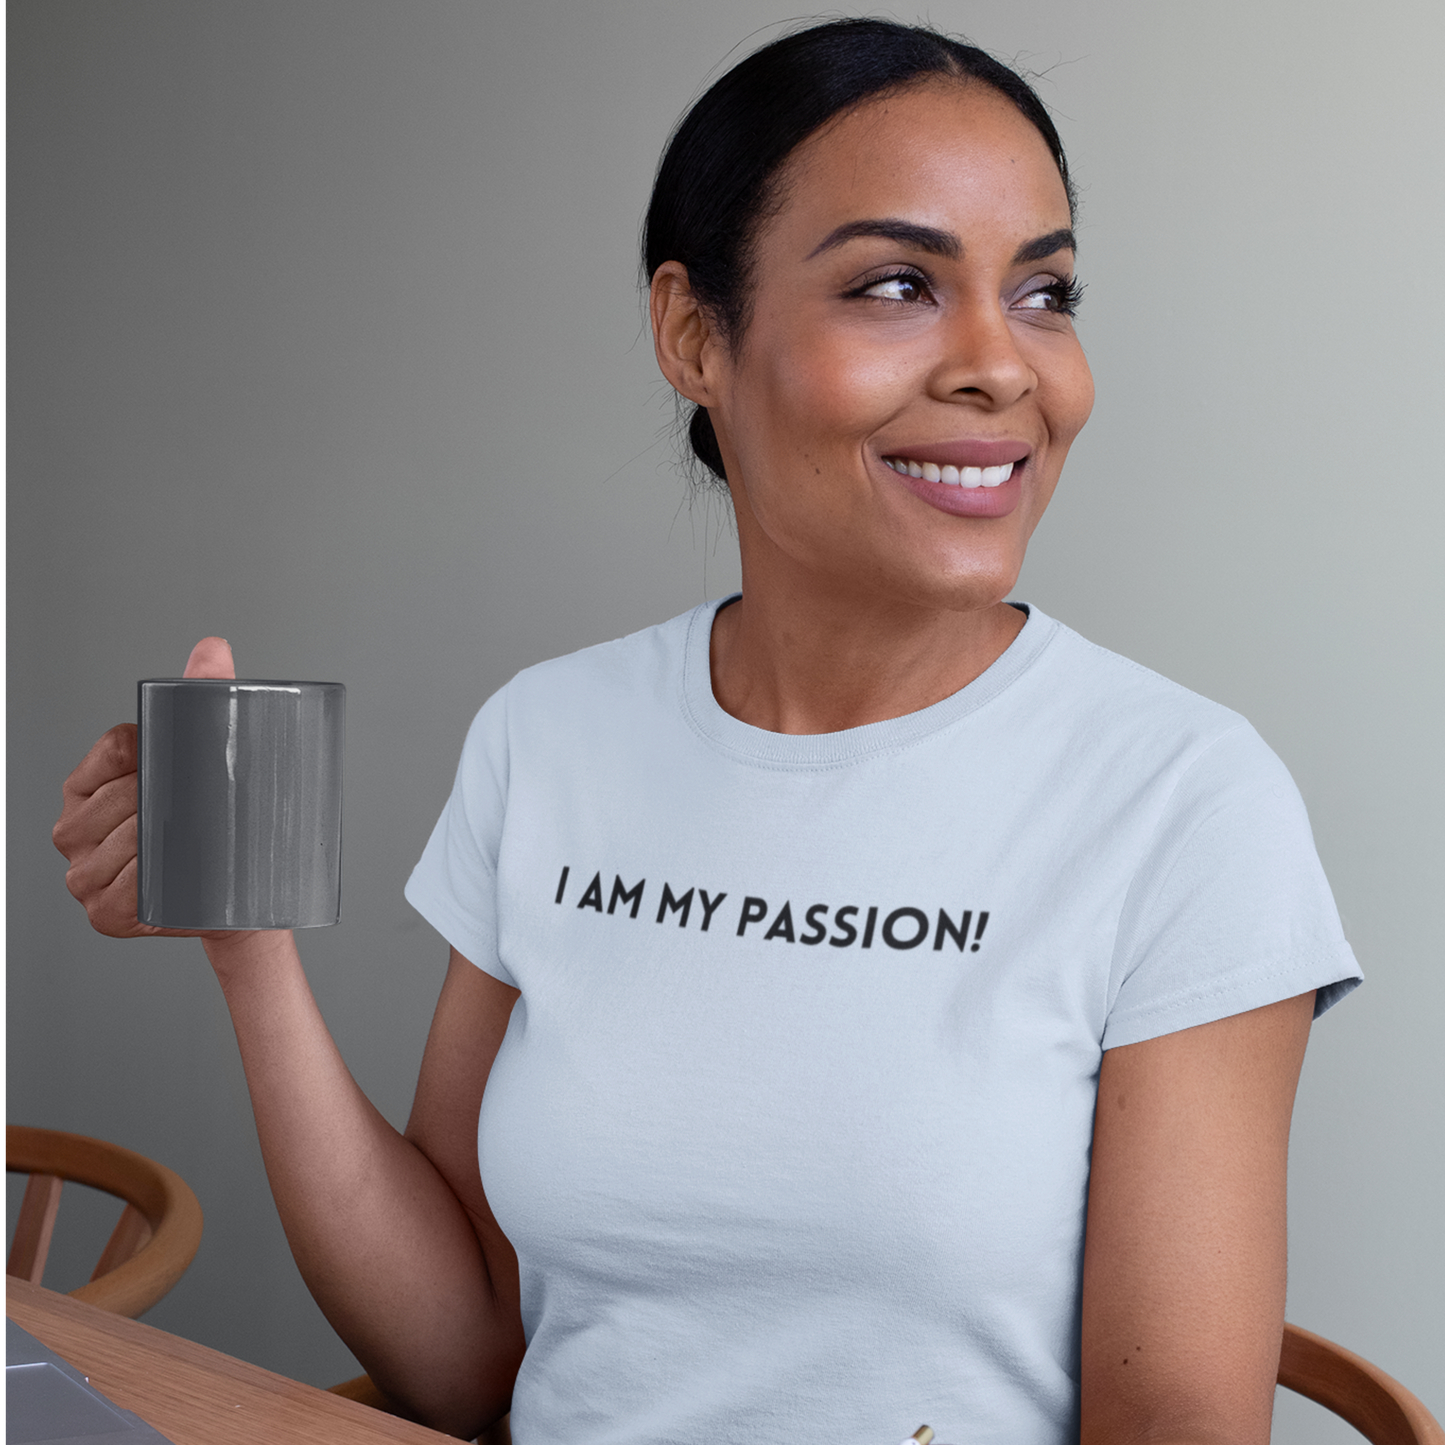 I am my passion tee shirt inspirational words t shirt, t shirt gift to uplift , self affirming words t shirt, t shirt for friends